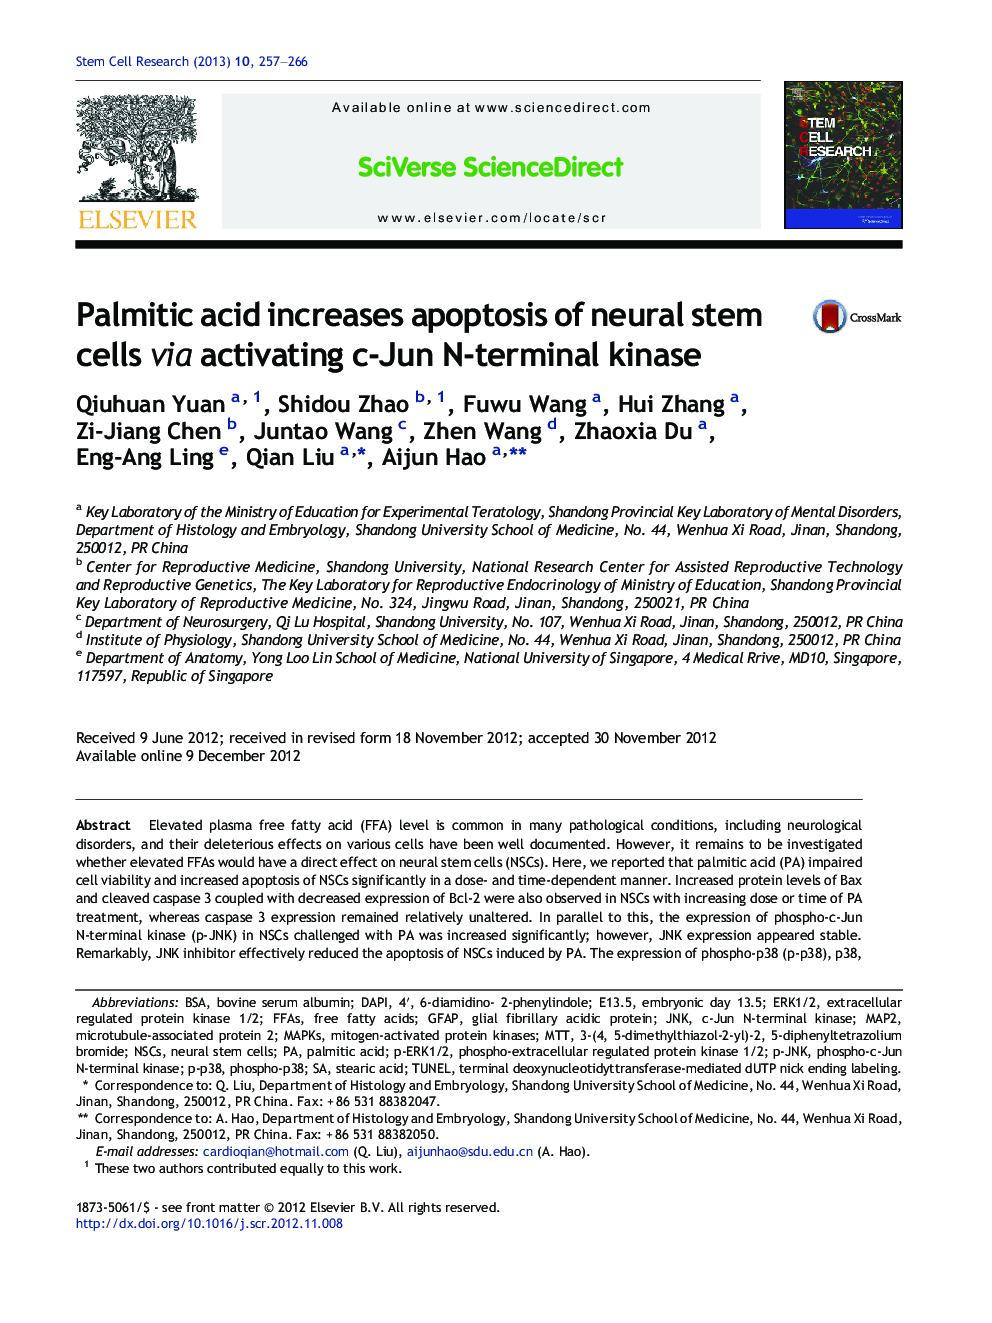 Palmitic acid increases apoptosis of neural stem cells via activating c-Jun N-terminal kinase